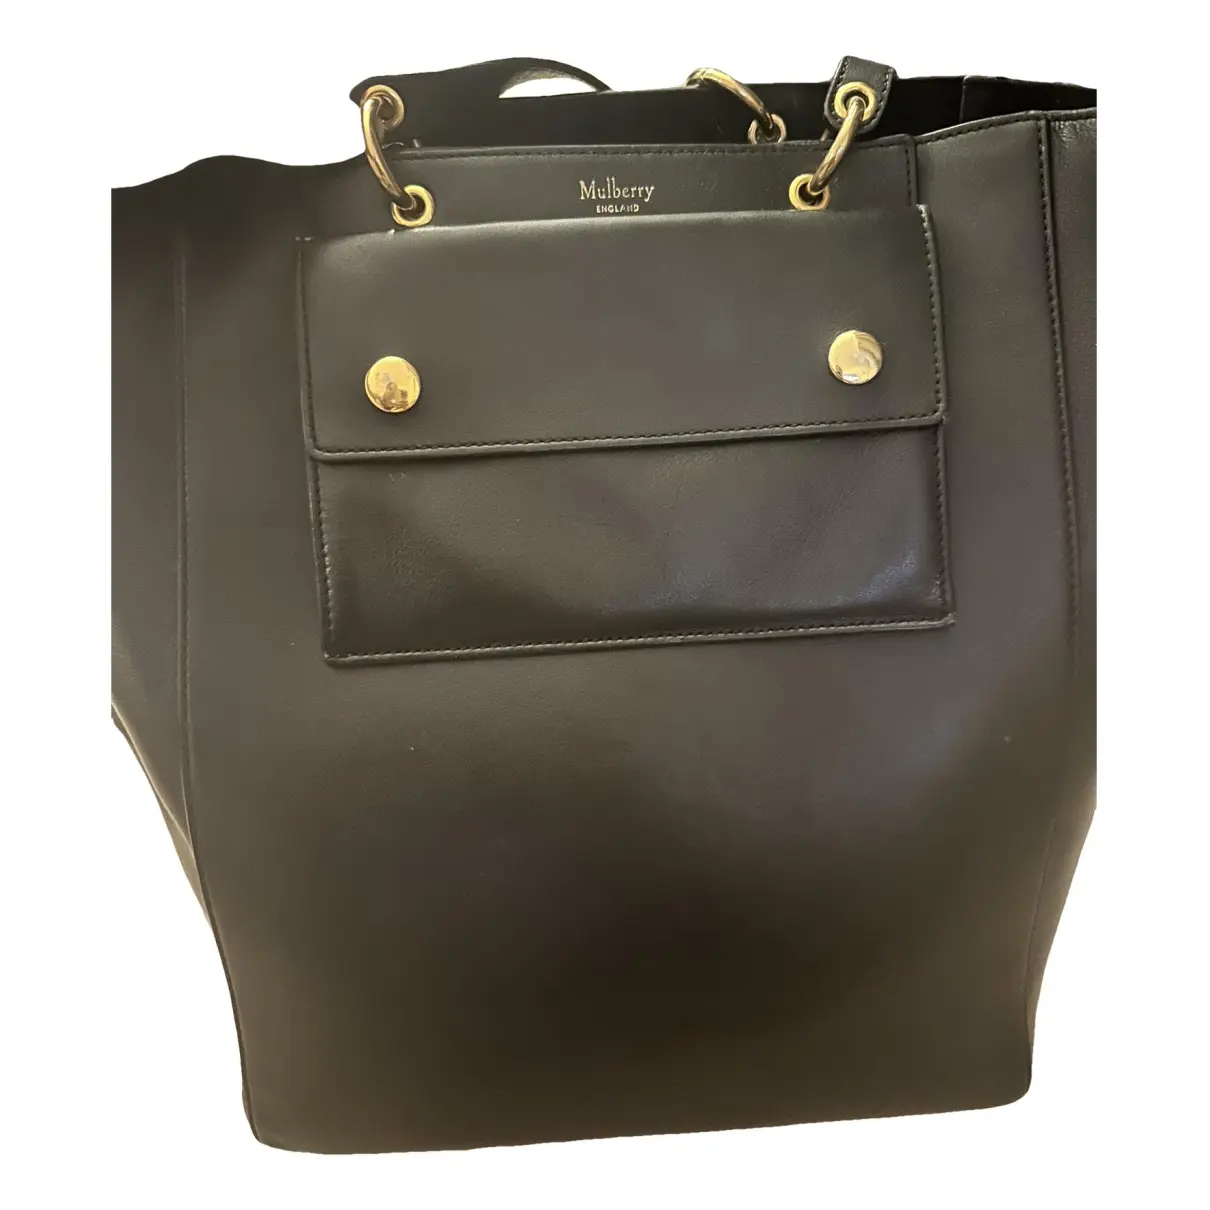 Buy Mulberry Arundel leather handbag online